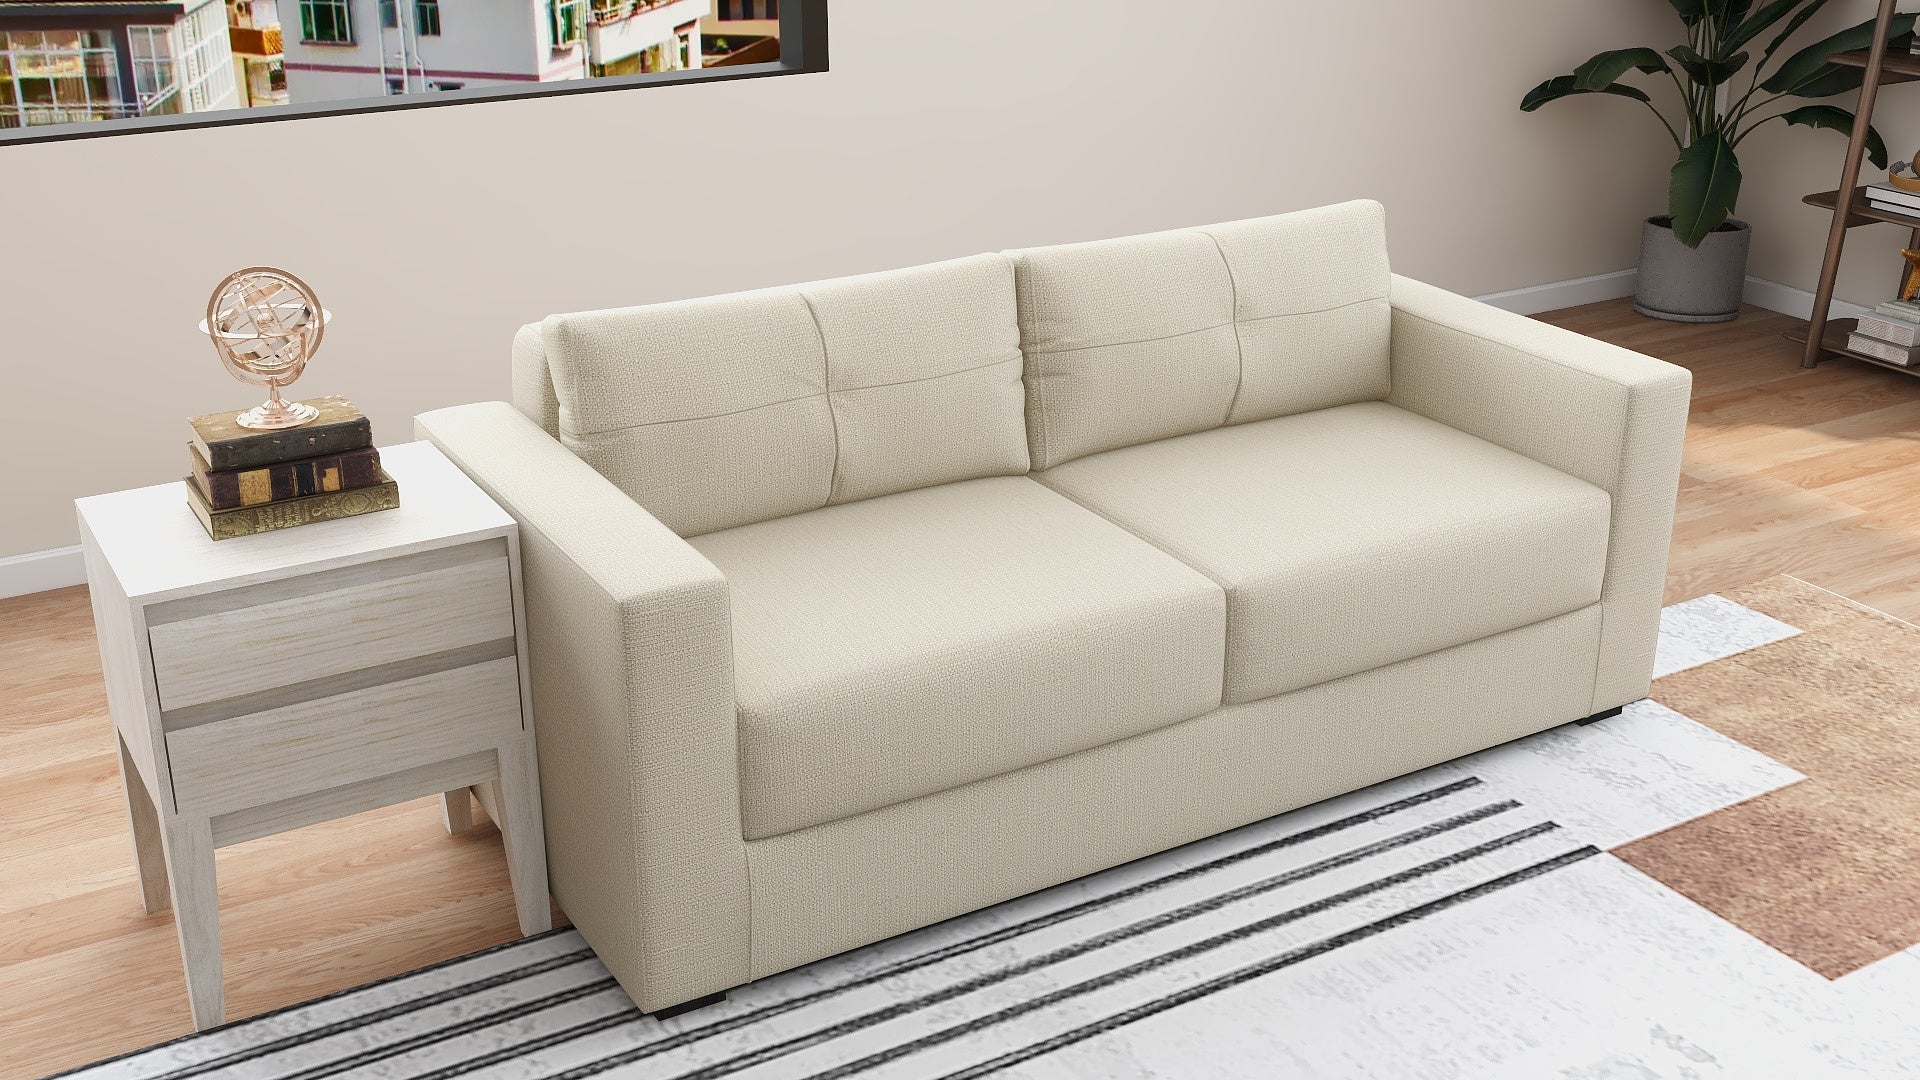 KINGSTON 3-Seater Fabric Sofa AF Home